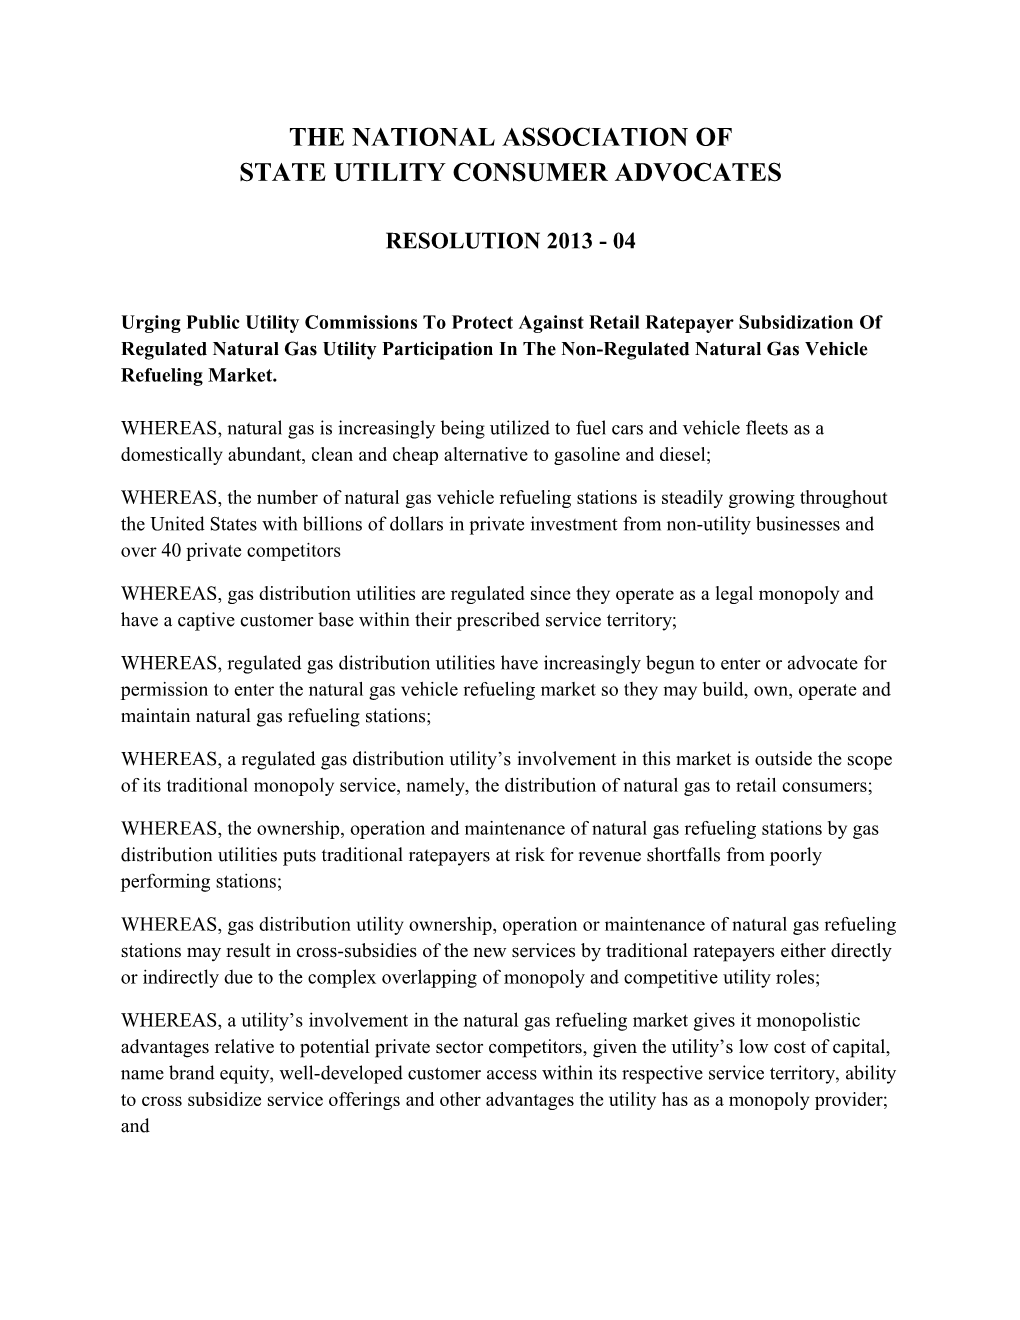 State Utility Consumer Advocates